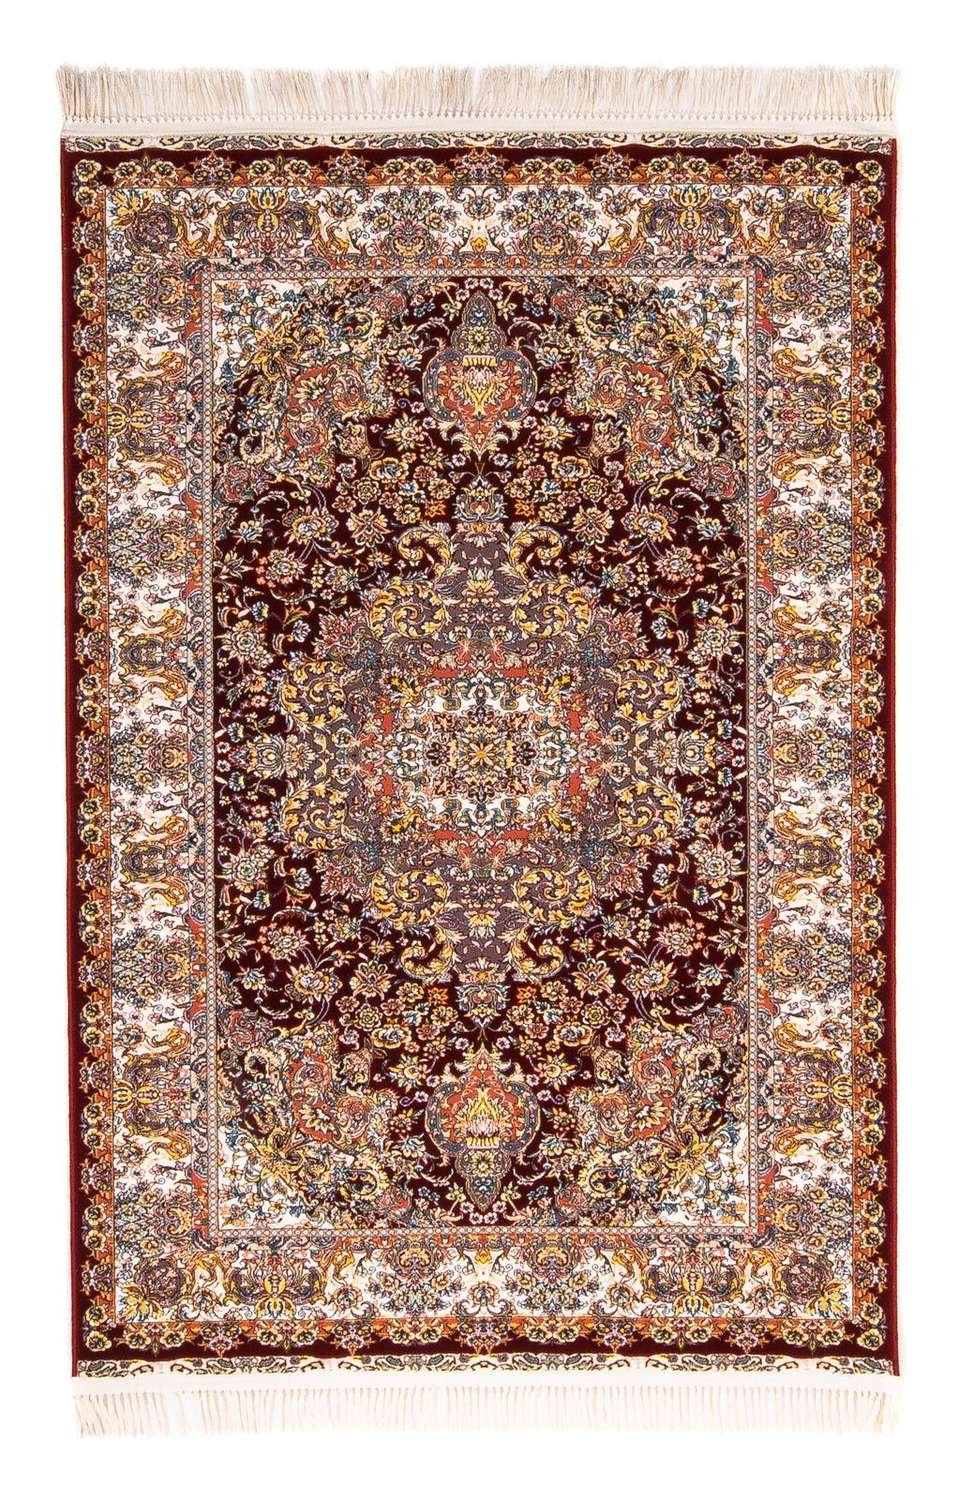 Orientální koberec - Ahang - obdélníkový